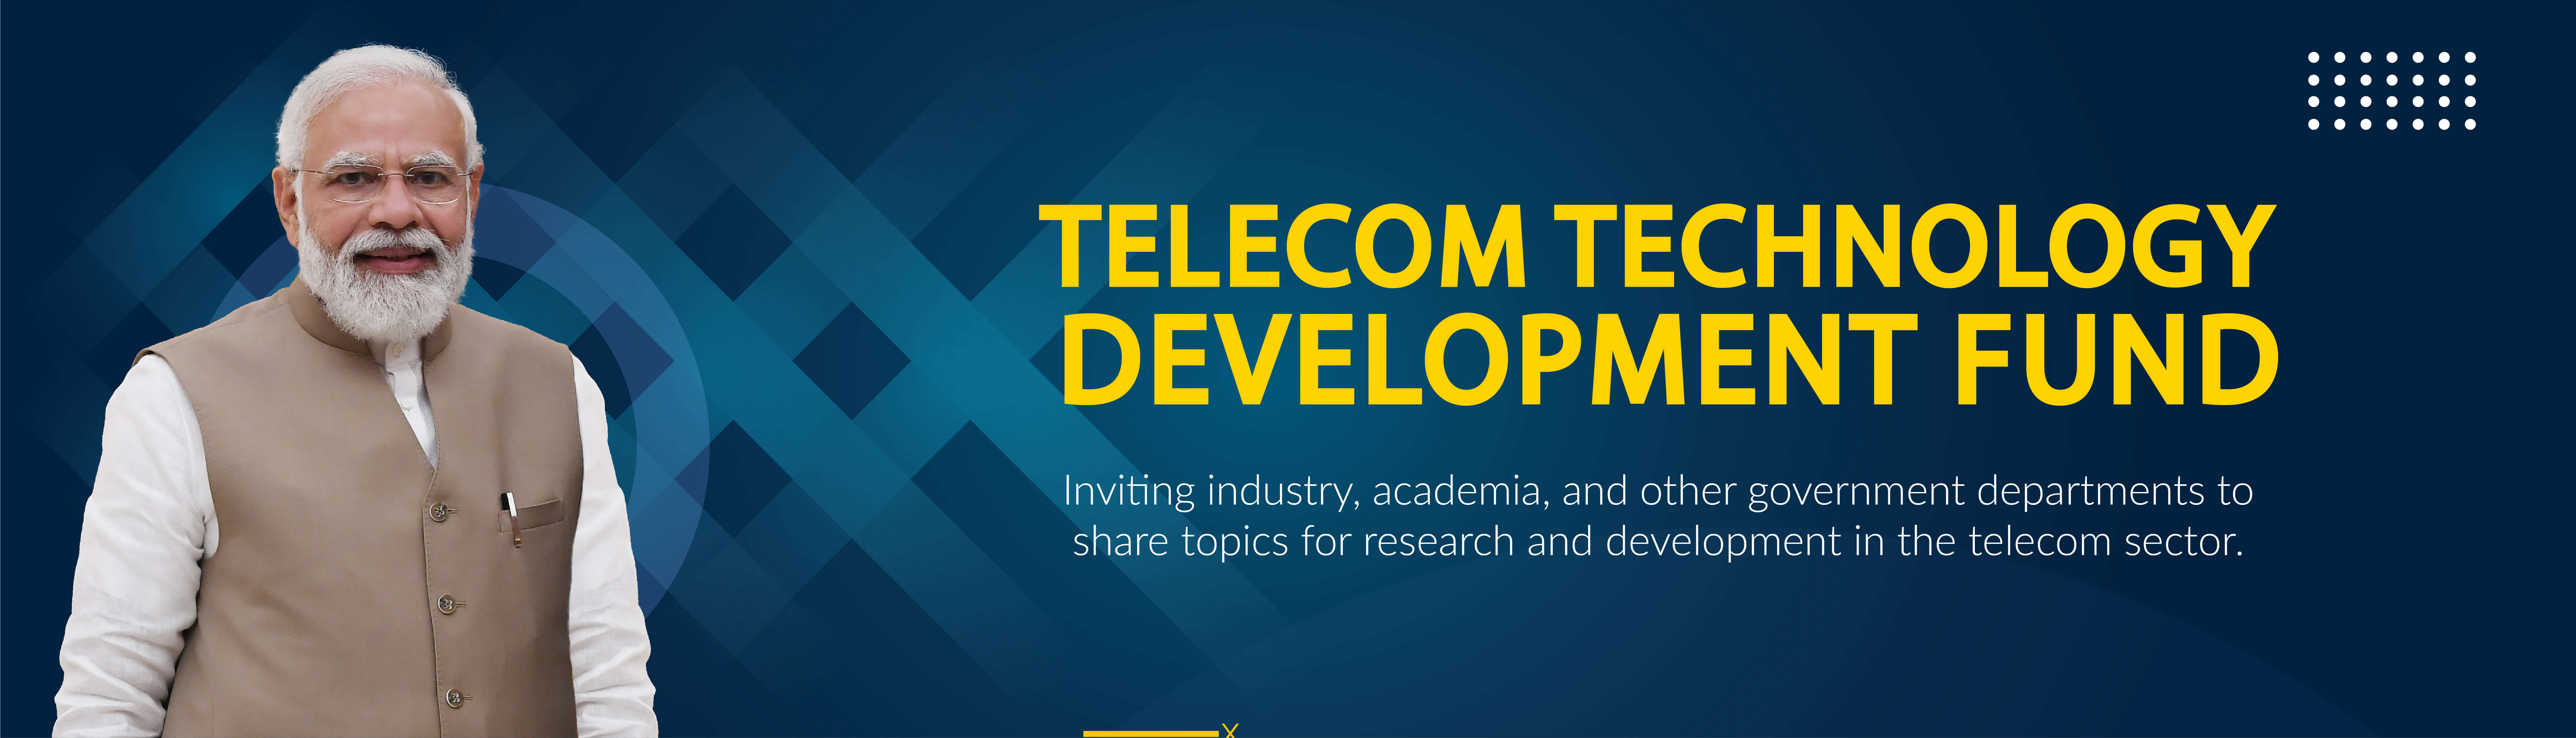 Telecom Technology Development Fund